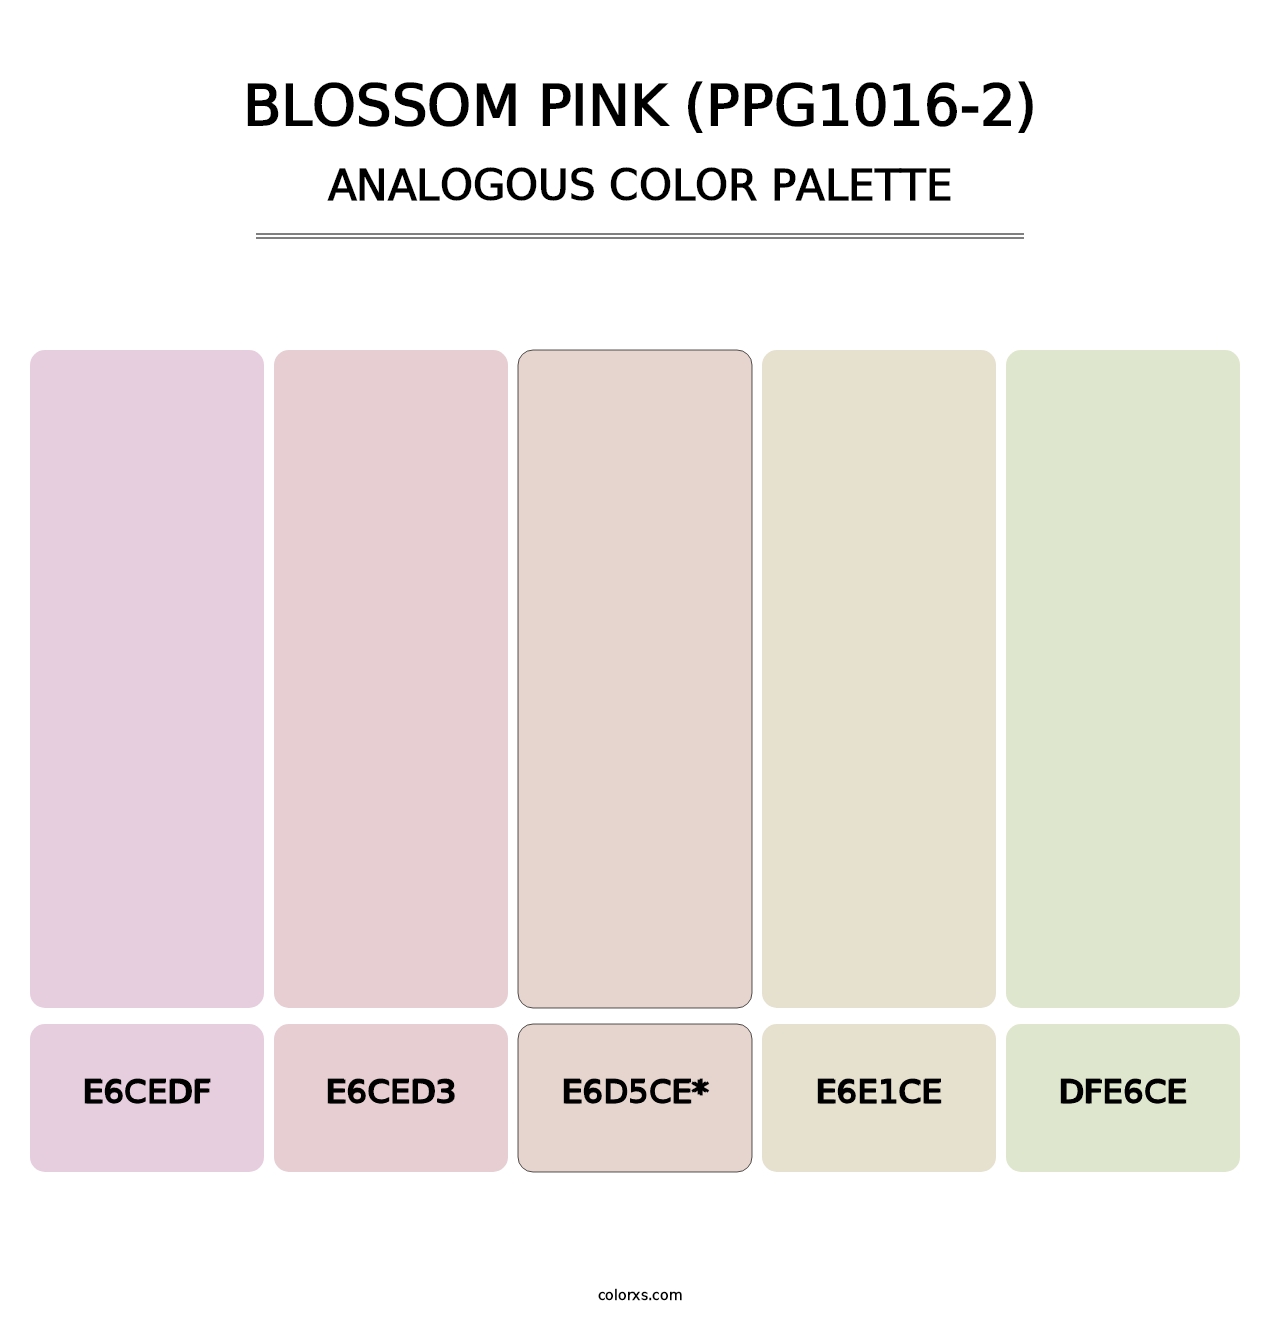 Blossom Pink (PPG1016-2) - Analogous Color Palette